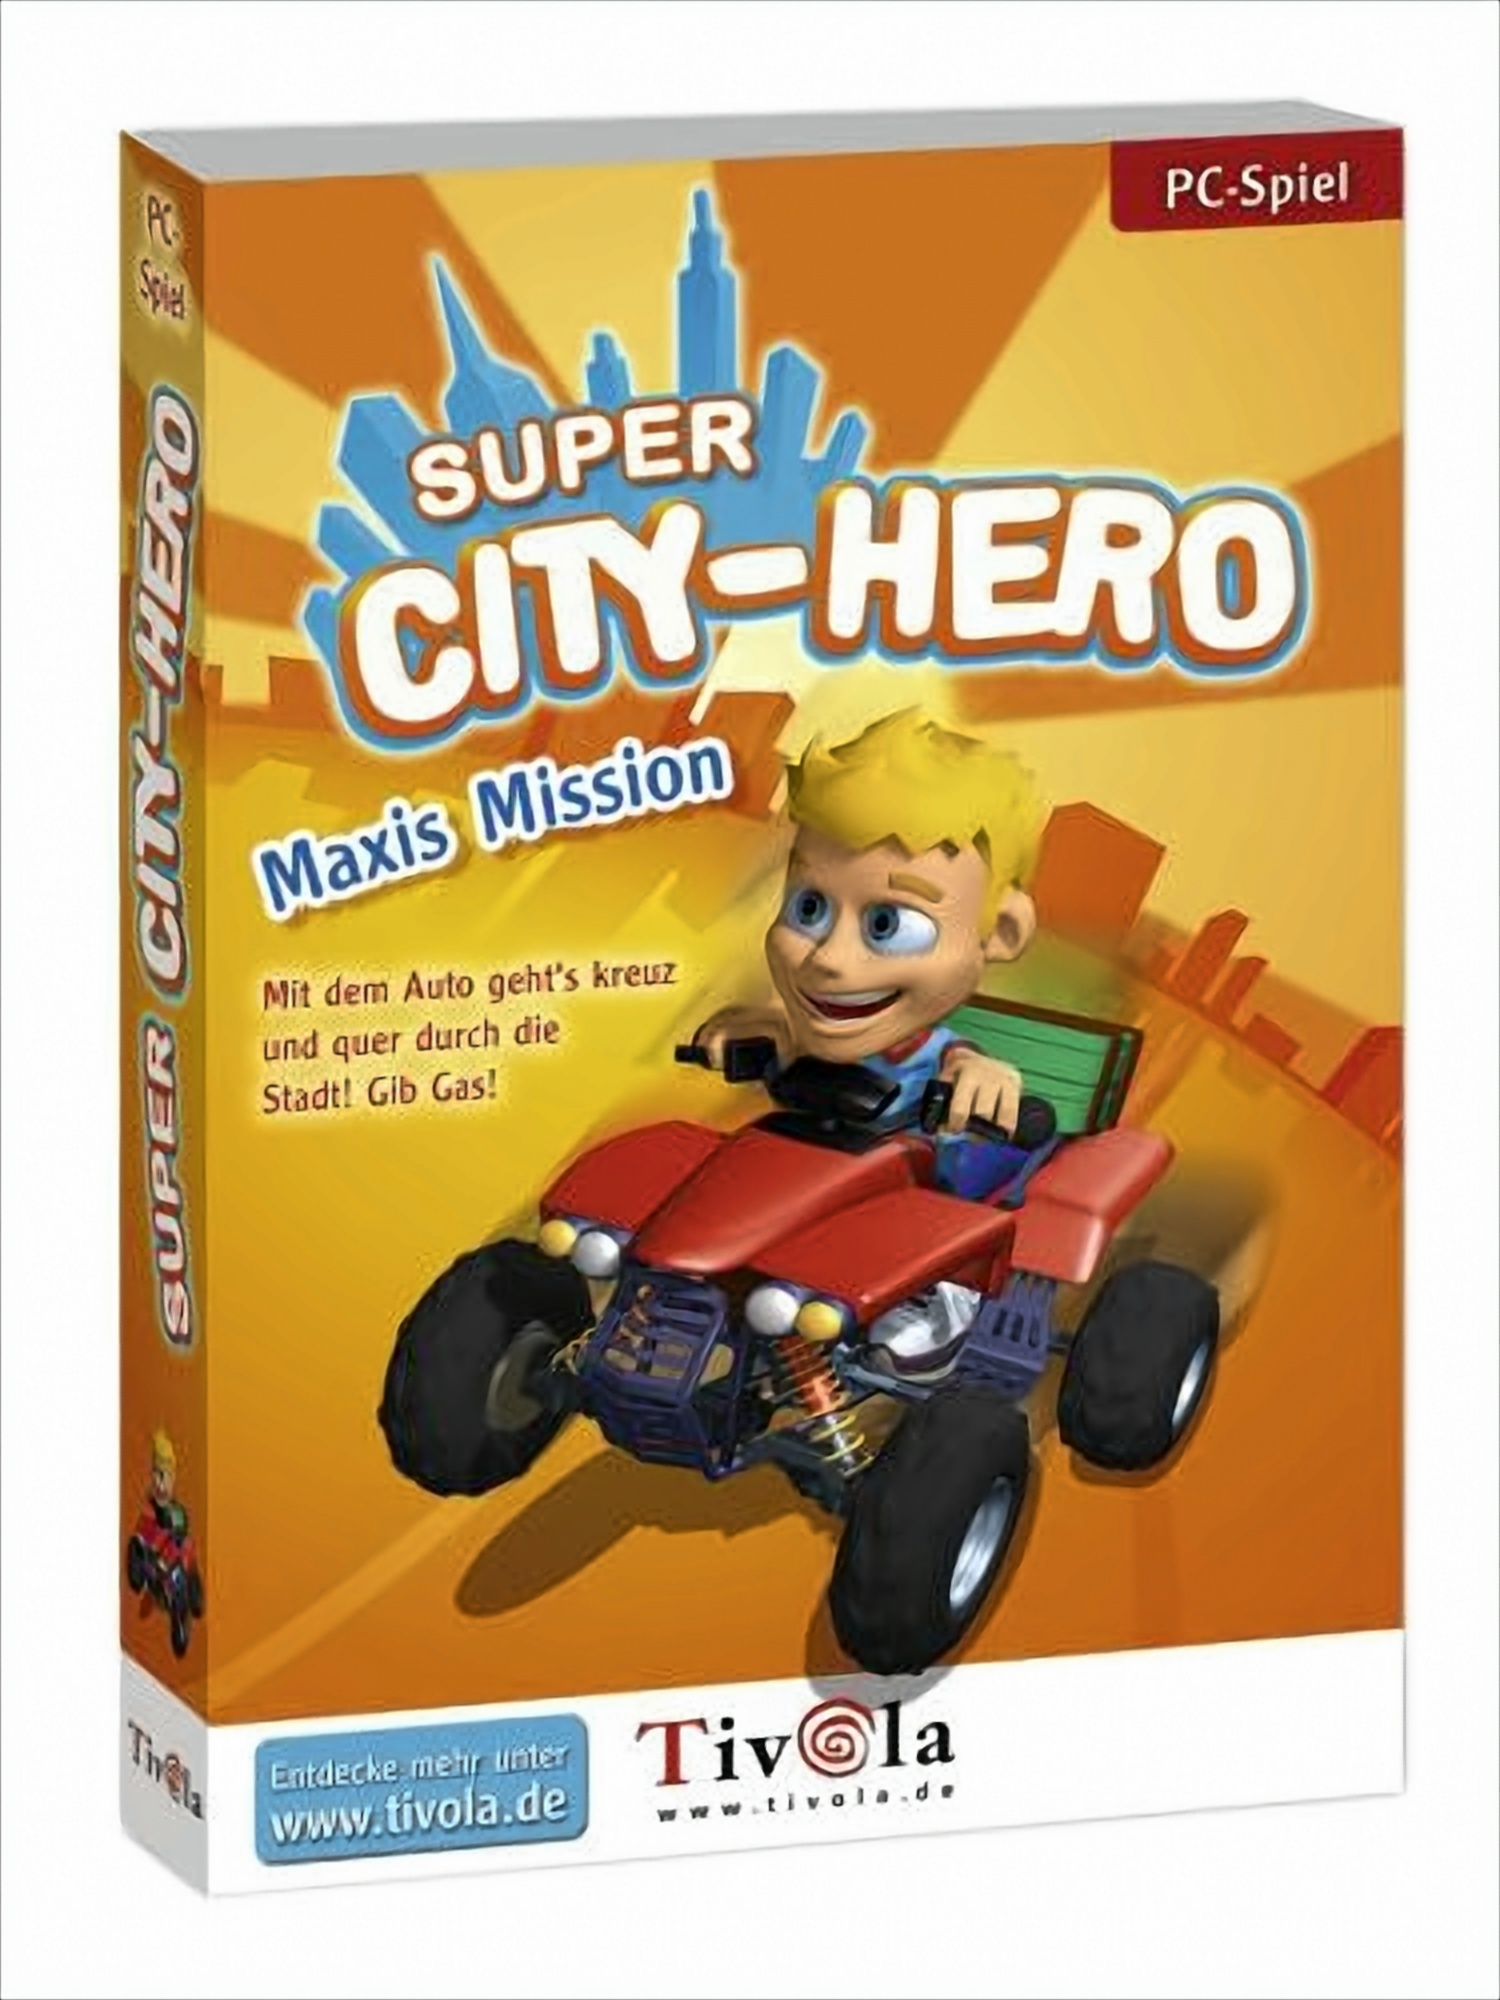 Super City Hero: Maxis [PC] - Mission